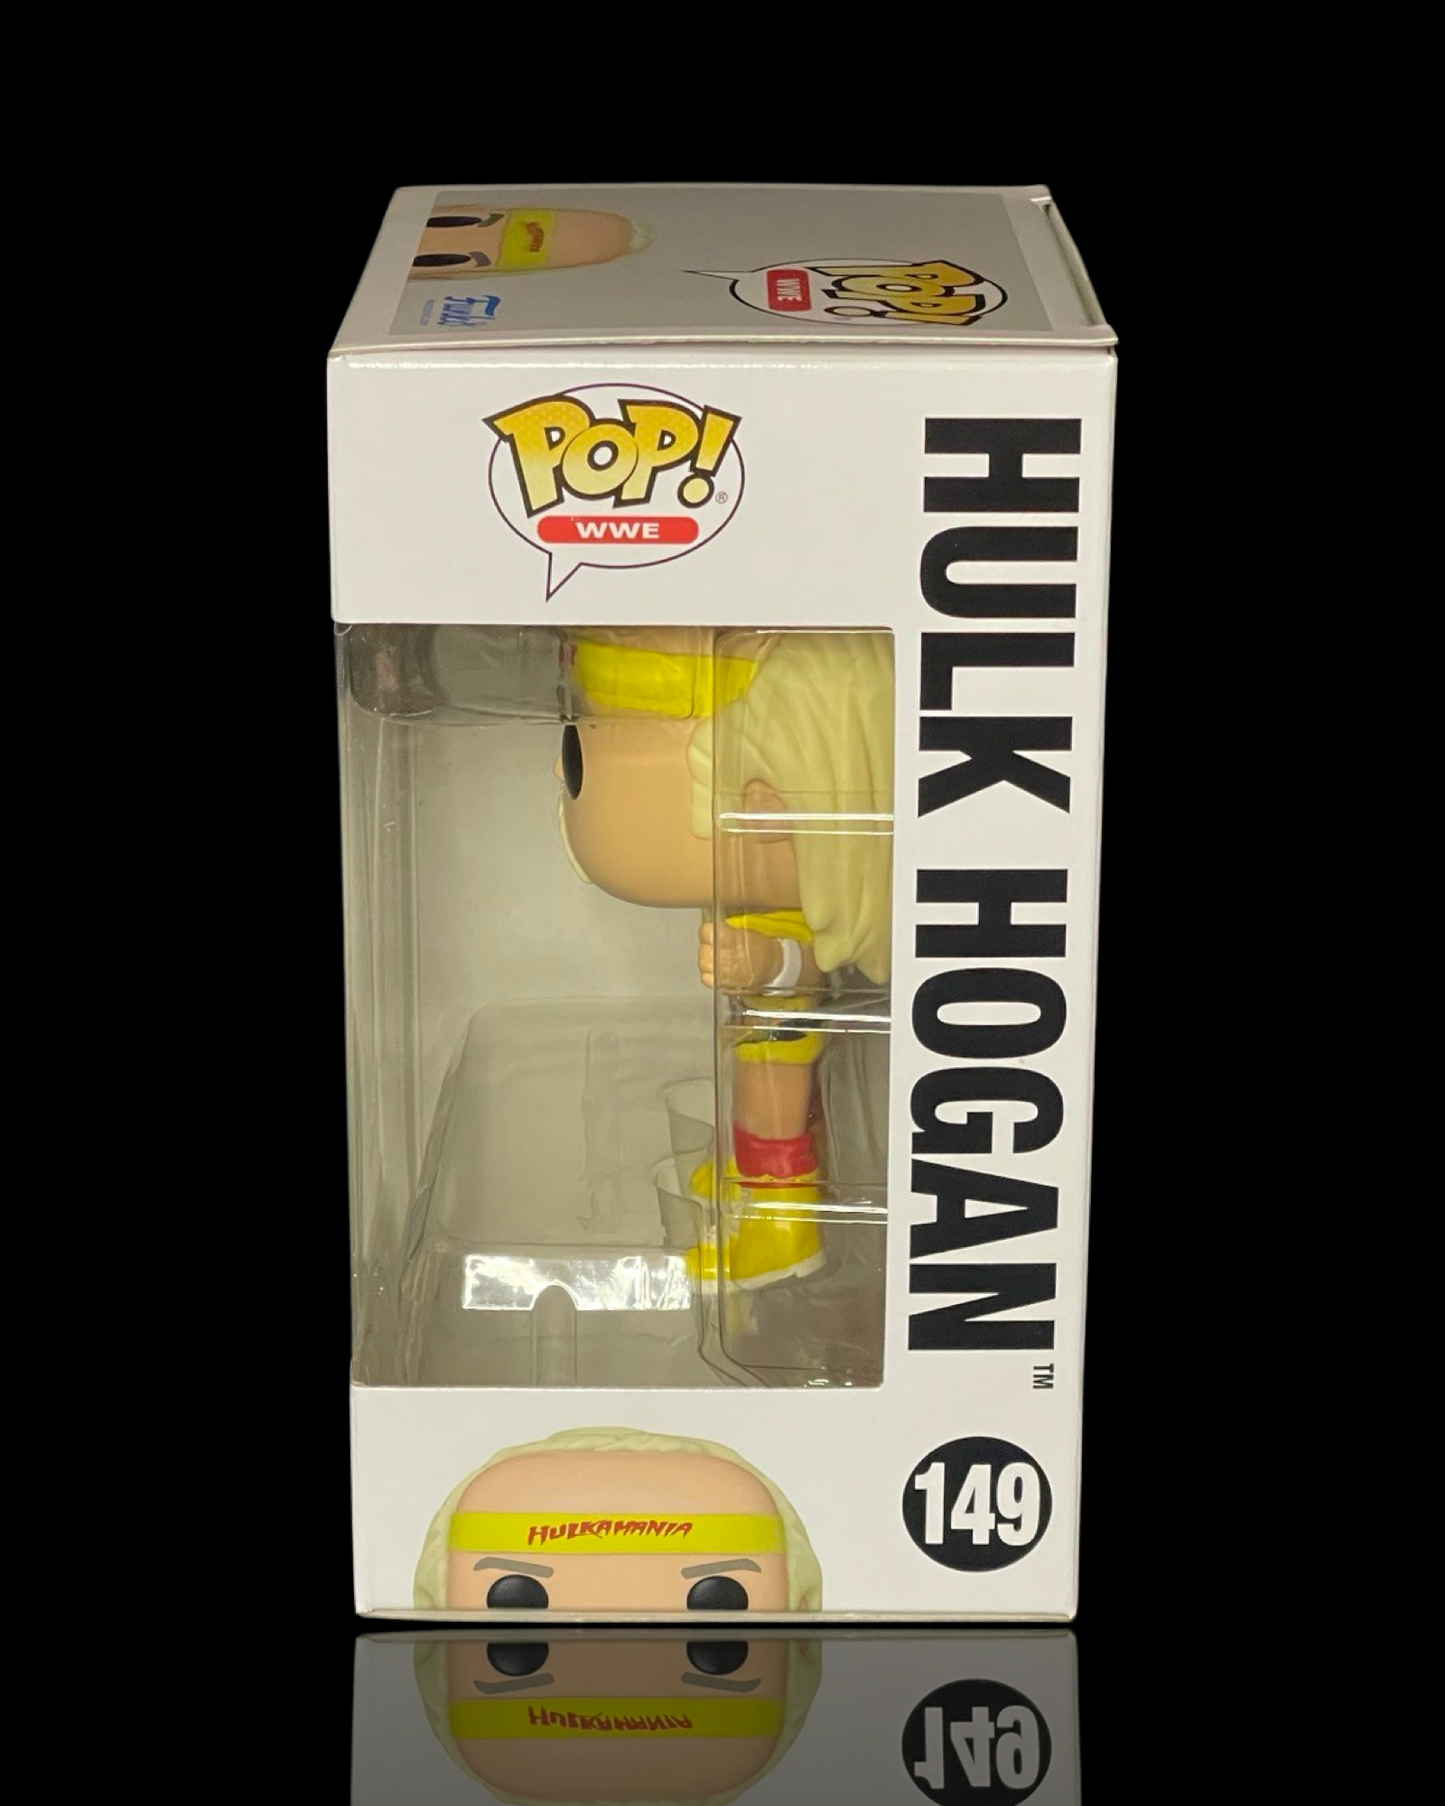 WWE: Hulk Hogan